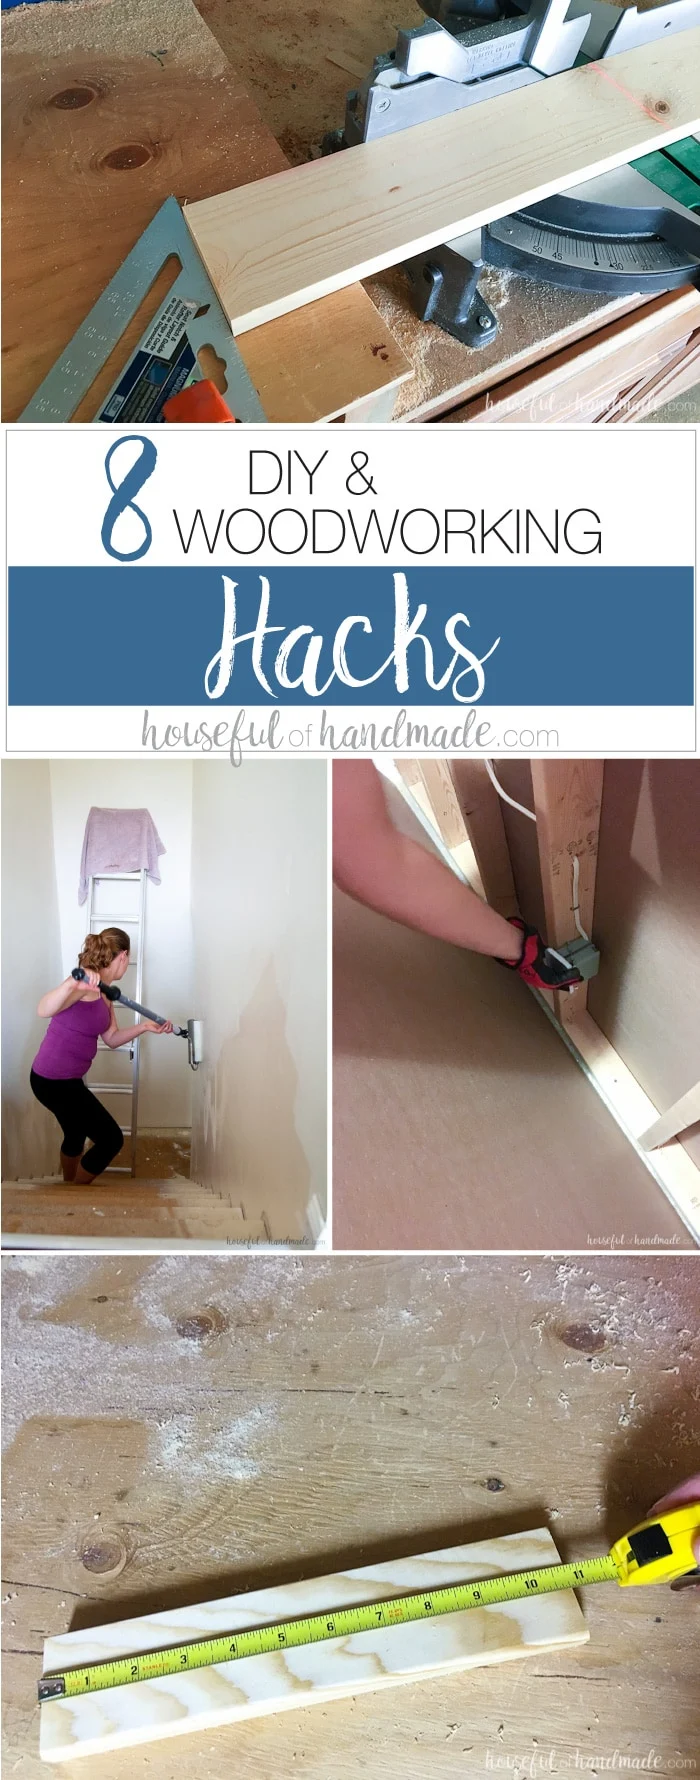 Make DIY easier with these easy DIY & woodworking hacks. Housefulofhandmade.com | Measuring Tips | Woodworking Tips | DIY Tips | Painting Tips